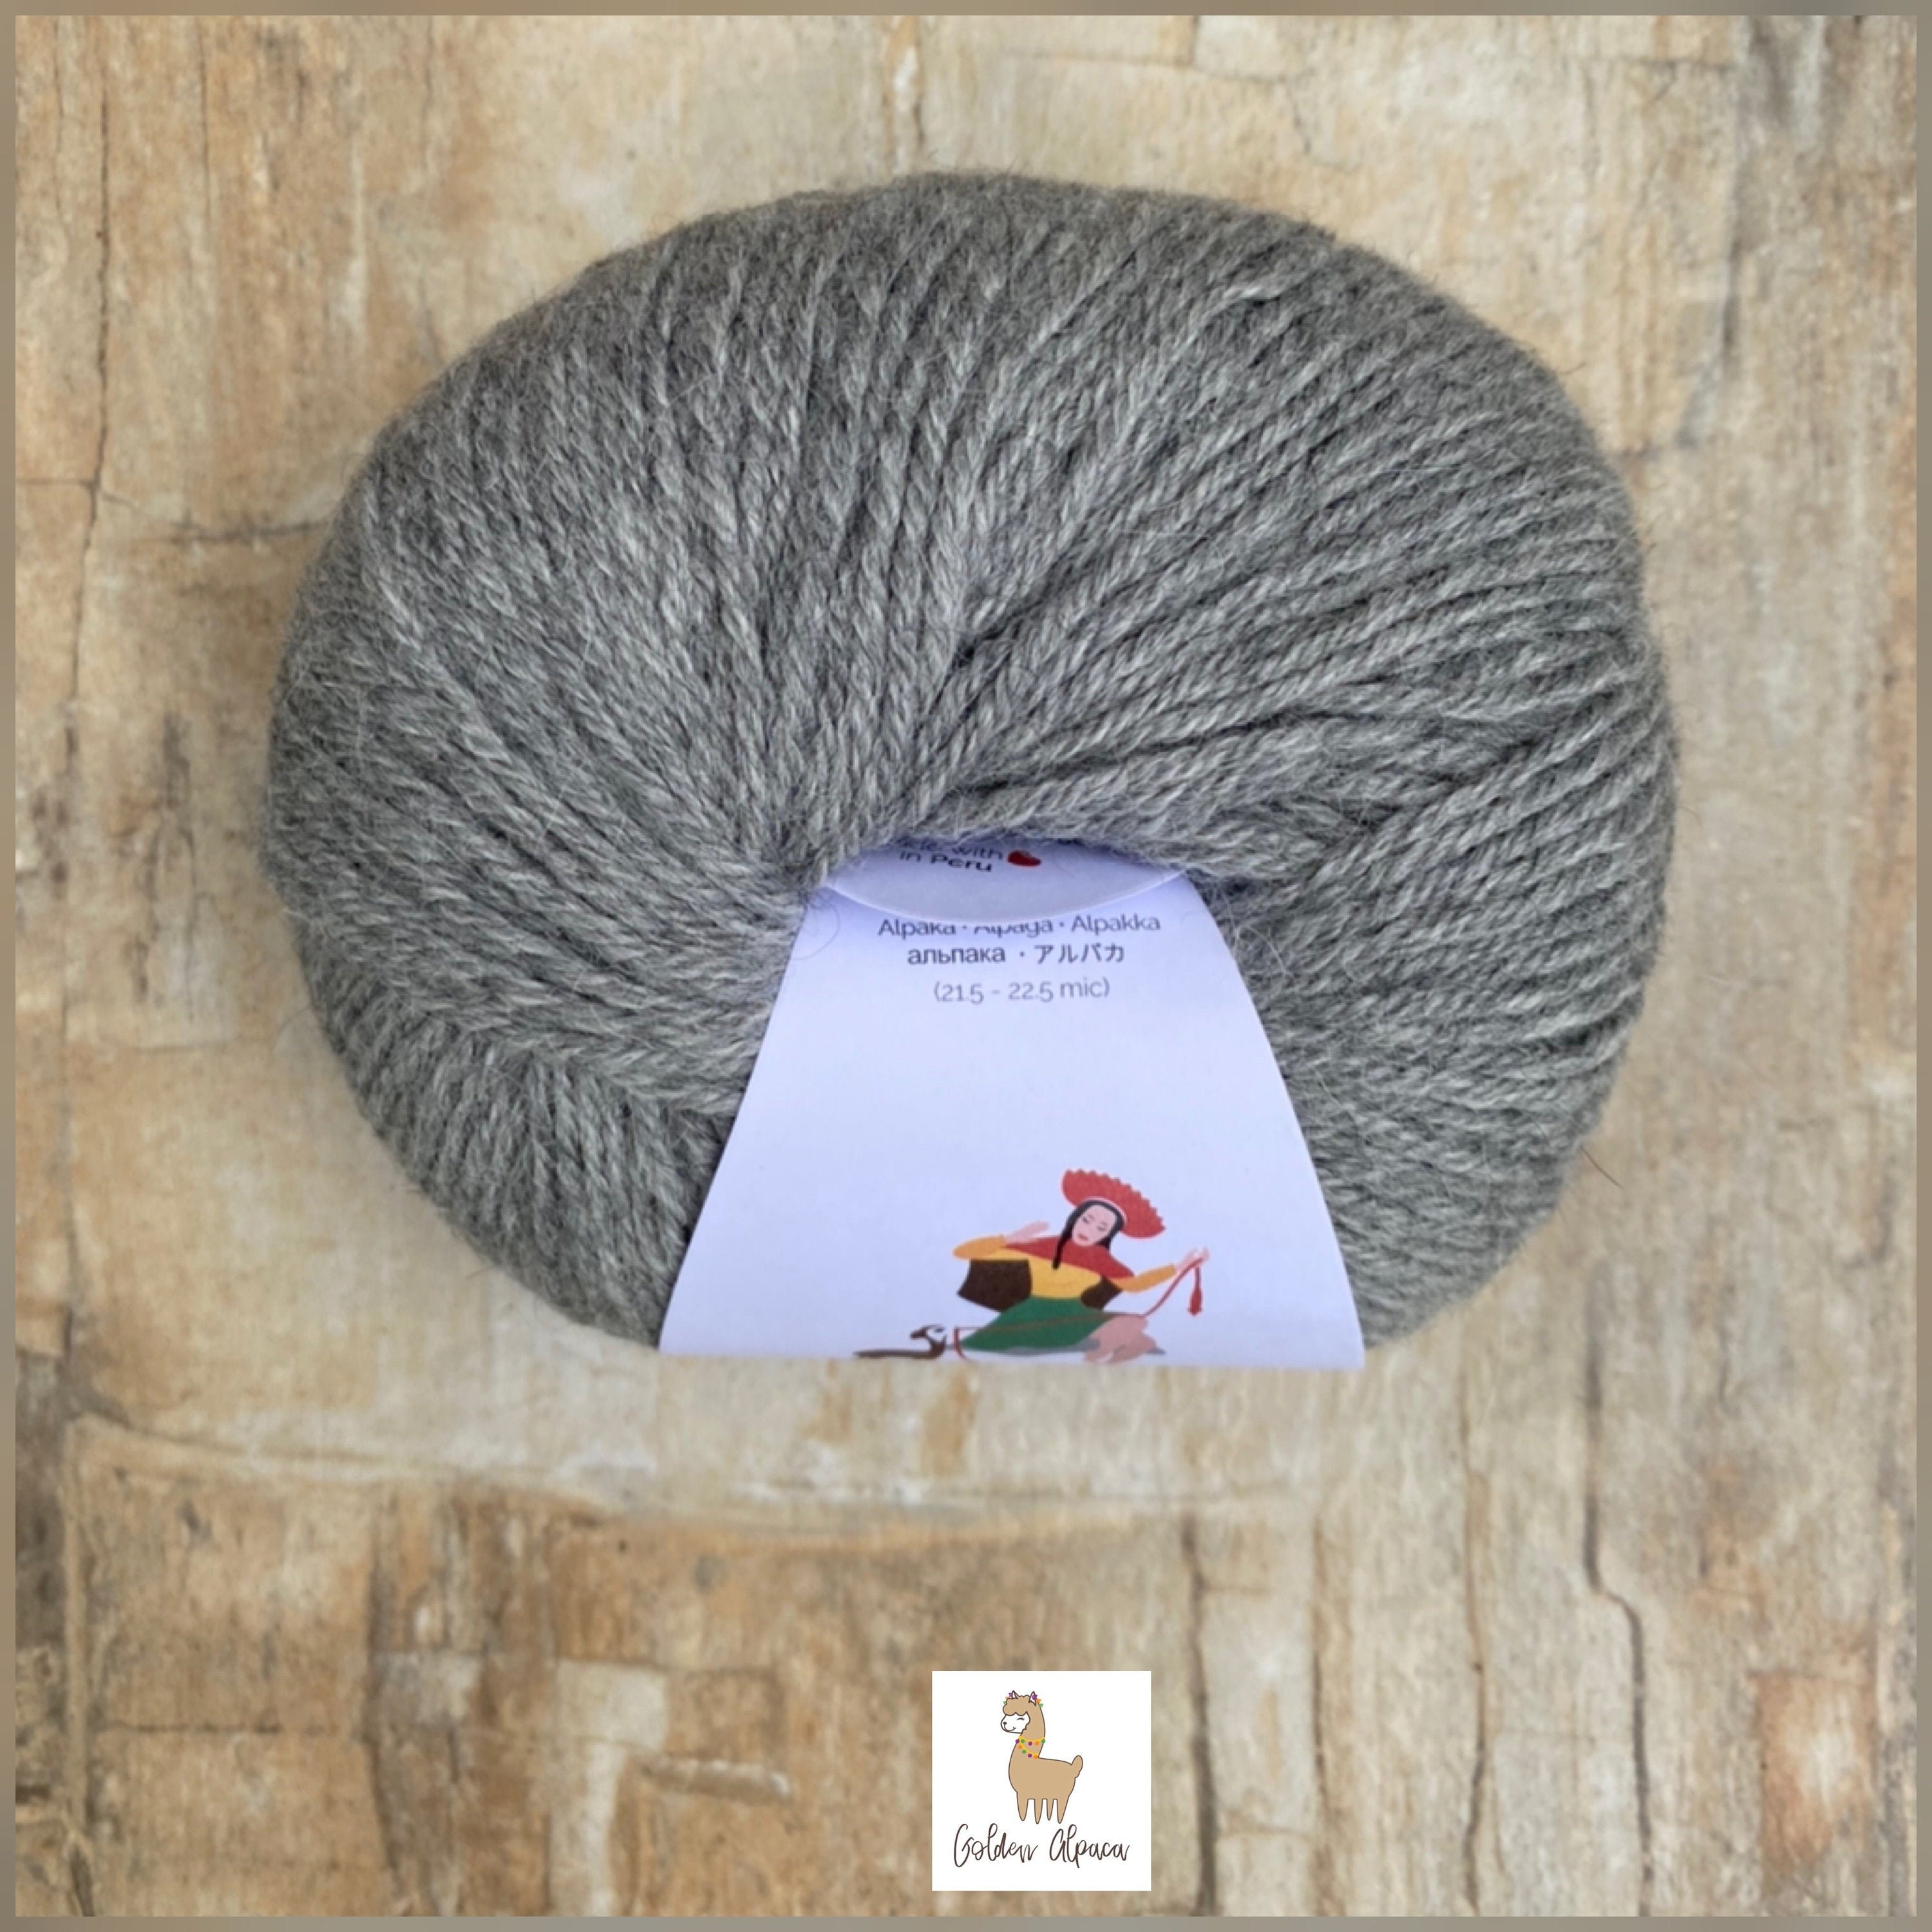 White Baby Alpaca Yarn DK for Crocheting or Knitting/ INDIECITA Double  Knitting 4/9 Baby Alpaca Yarn 